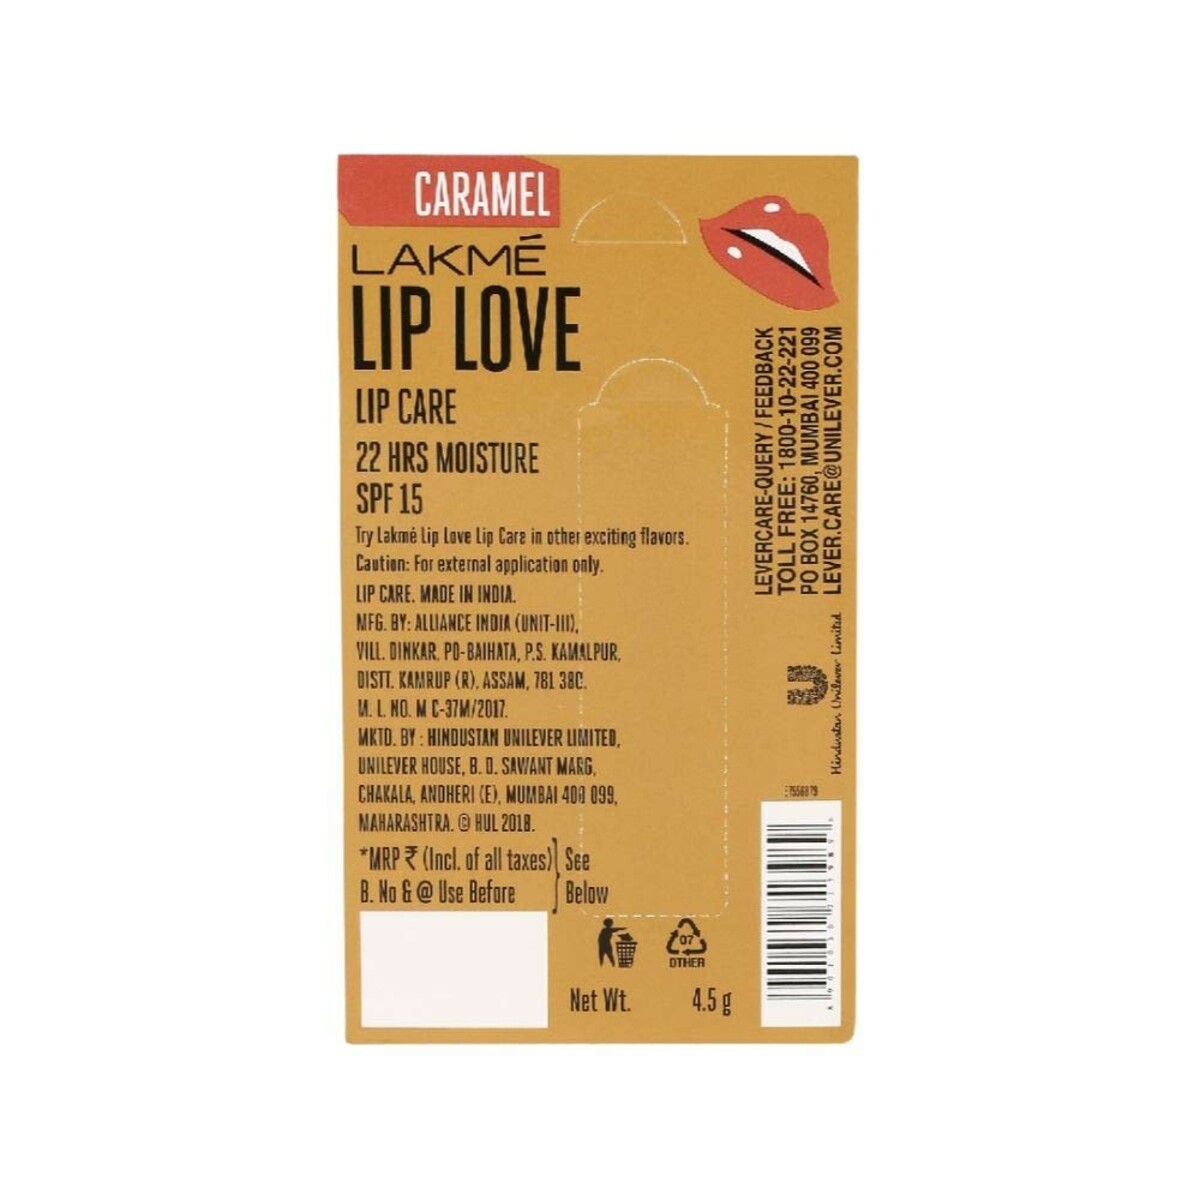 Lakme Lip Care Lip LovE Caramel SPF15 4.5g